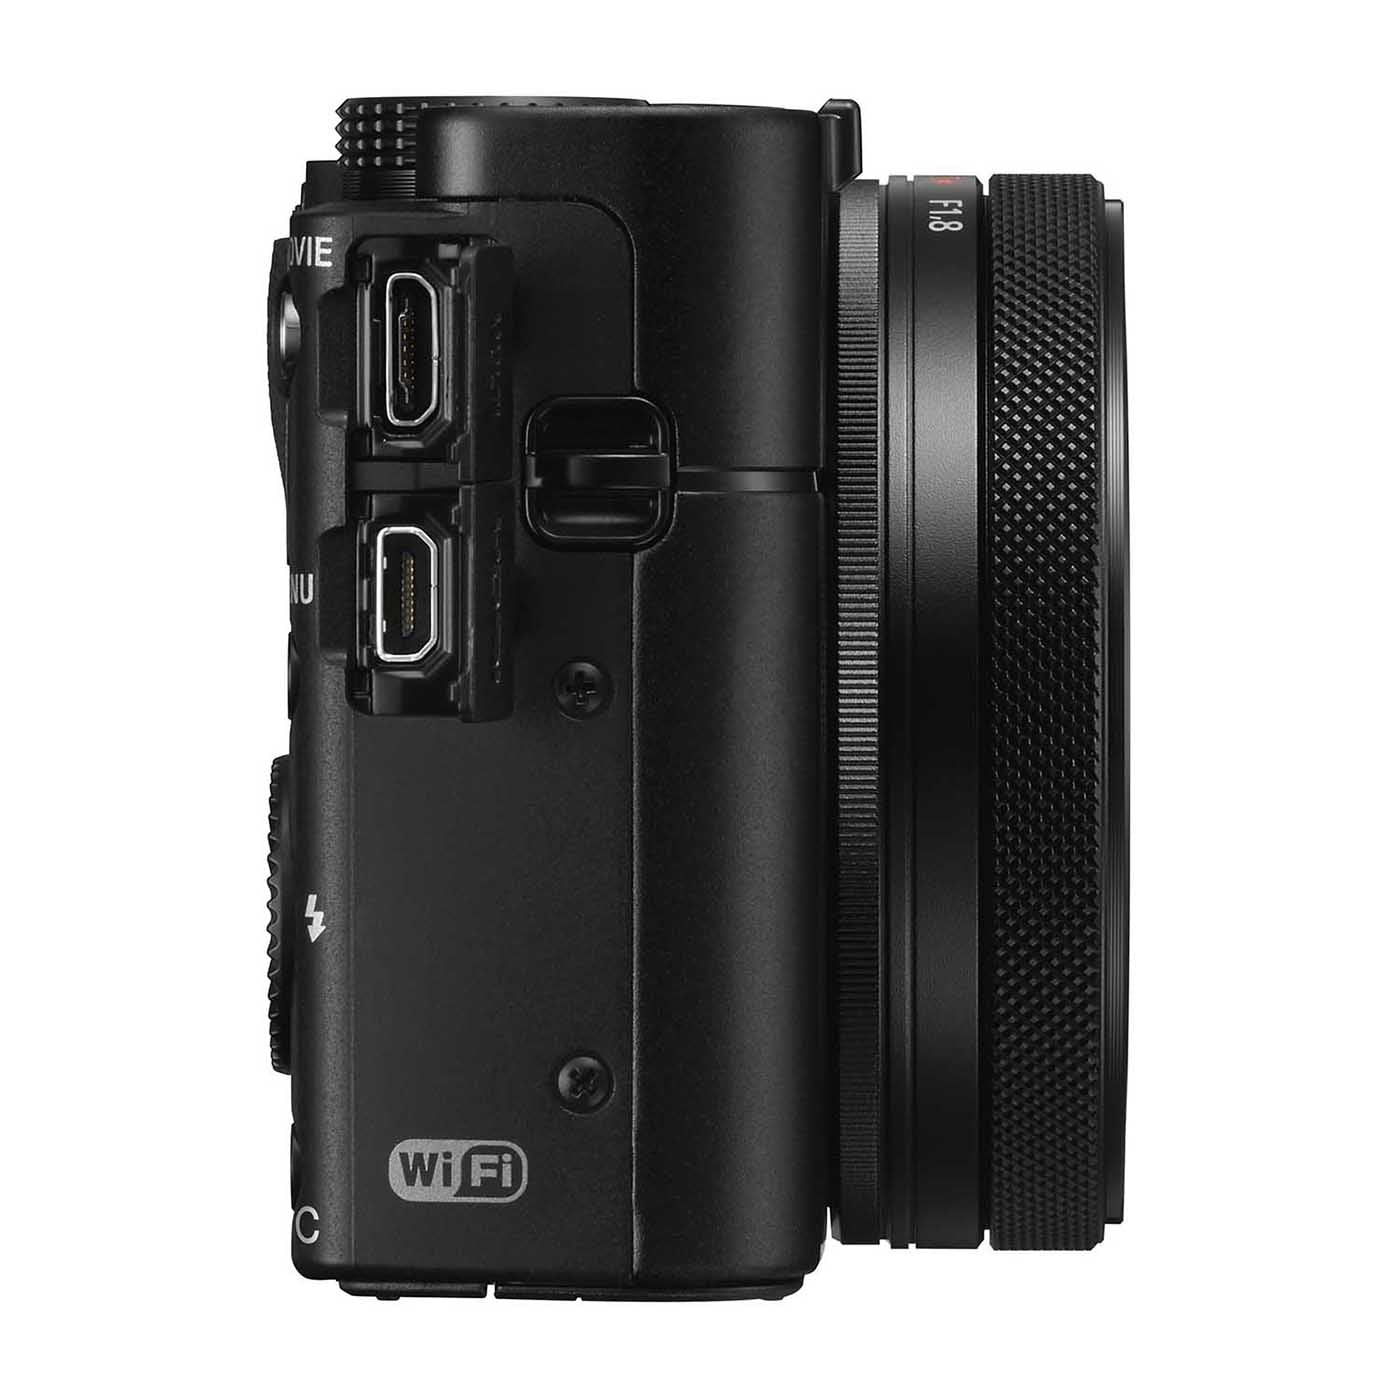 DSC-RX100 V 1.0-type sensor compact camera with superior AF performance